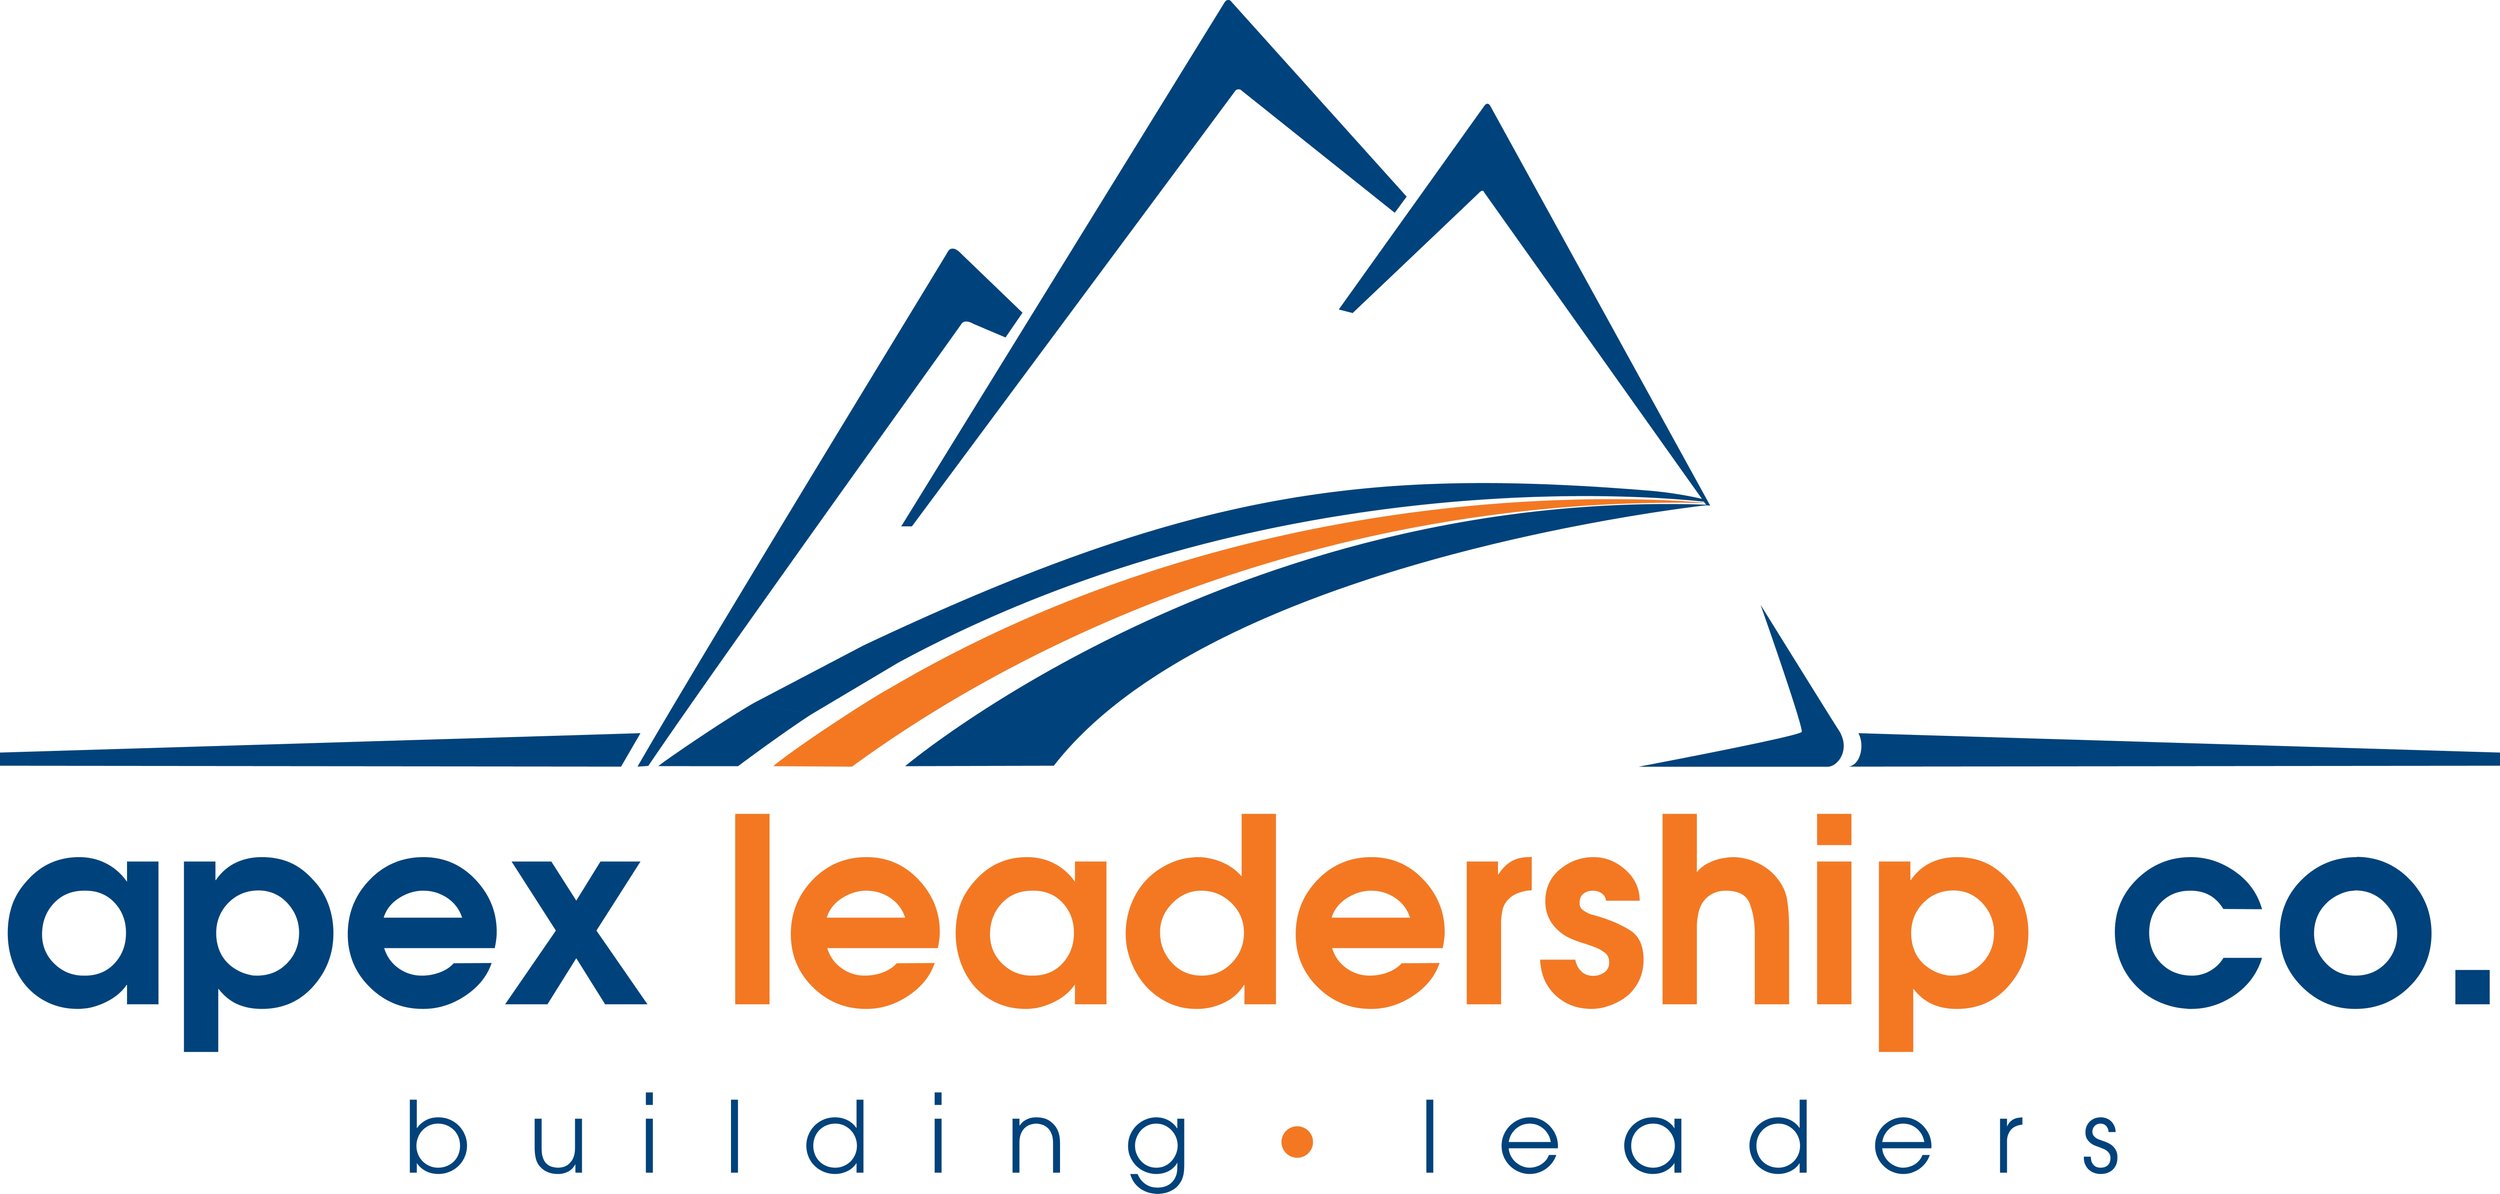 Apex Leadership Co Logo.jpg